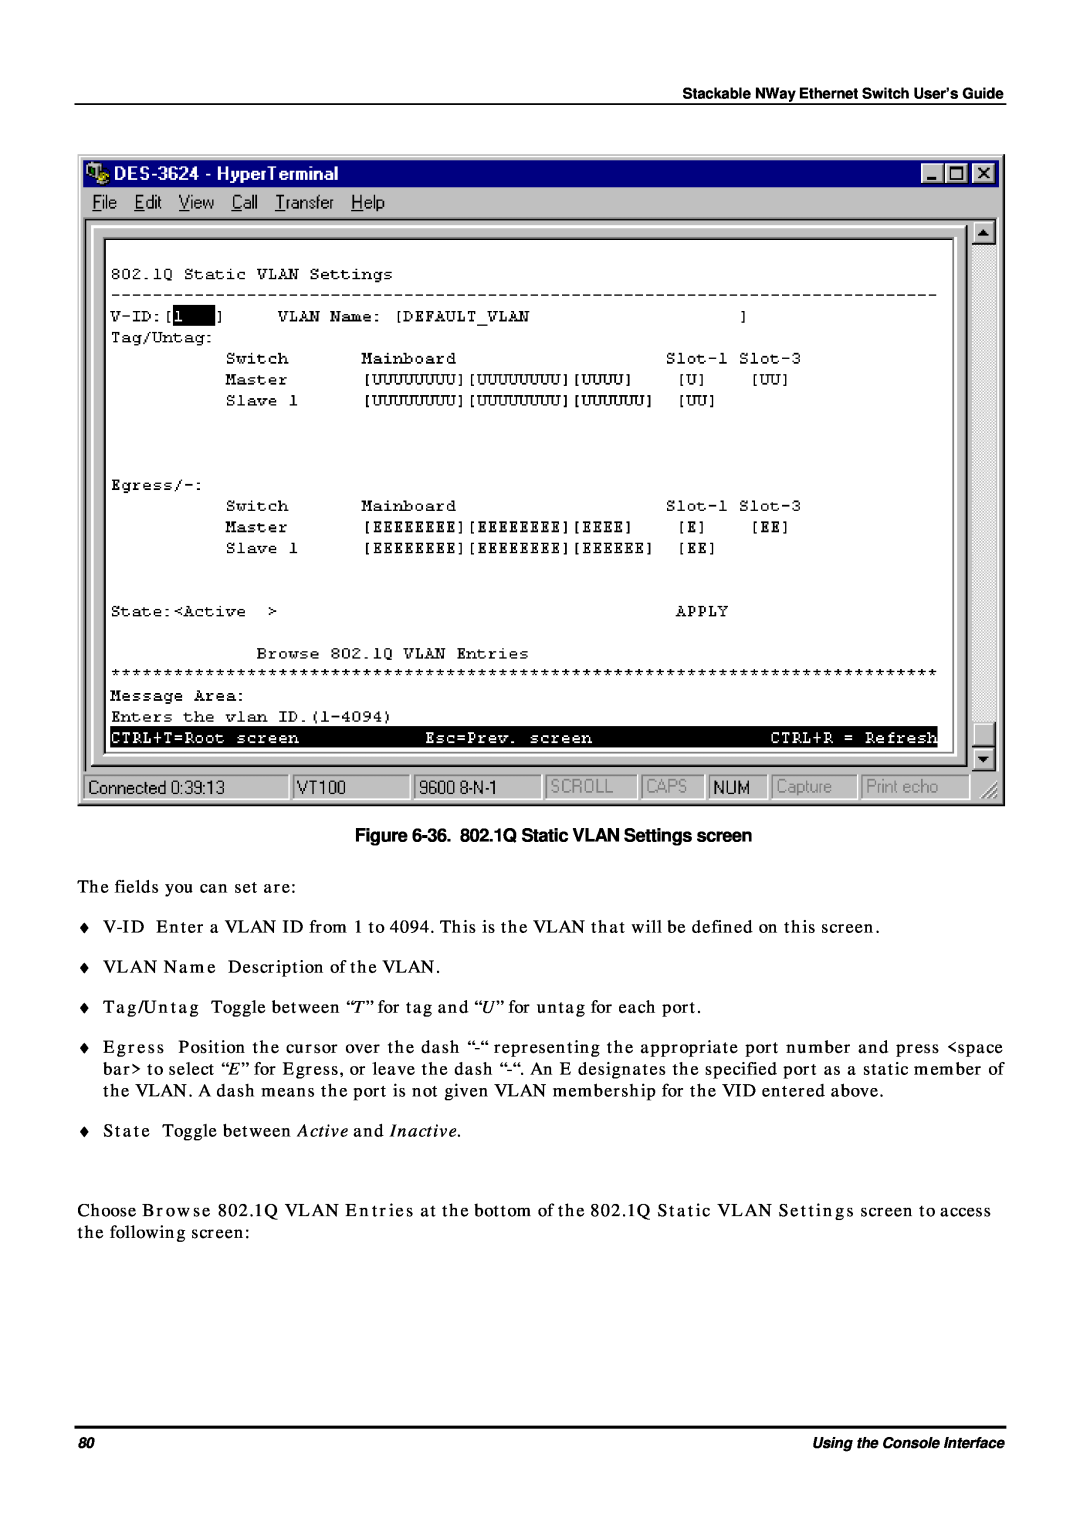 D-Link DES-3624 manual 36. 802.1Q Static VLAN Settings screen 